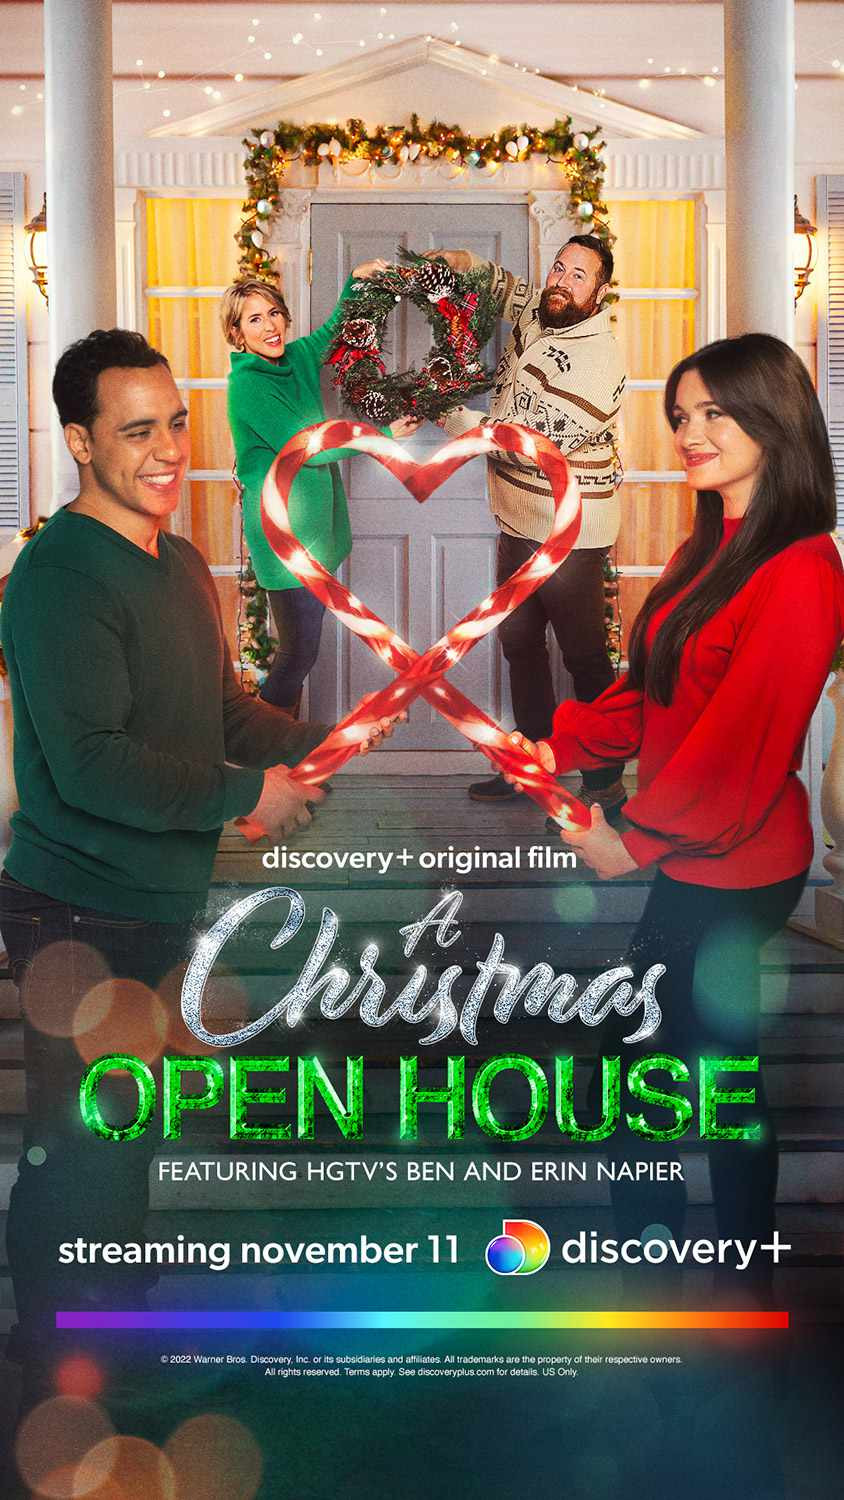 https://shotcan.com/images/A-Christmas-Open-House-PR_Statics_Streaming-Nov.-11_-5d0ebbd896d84909bc13131c744679a4.jpg